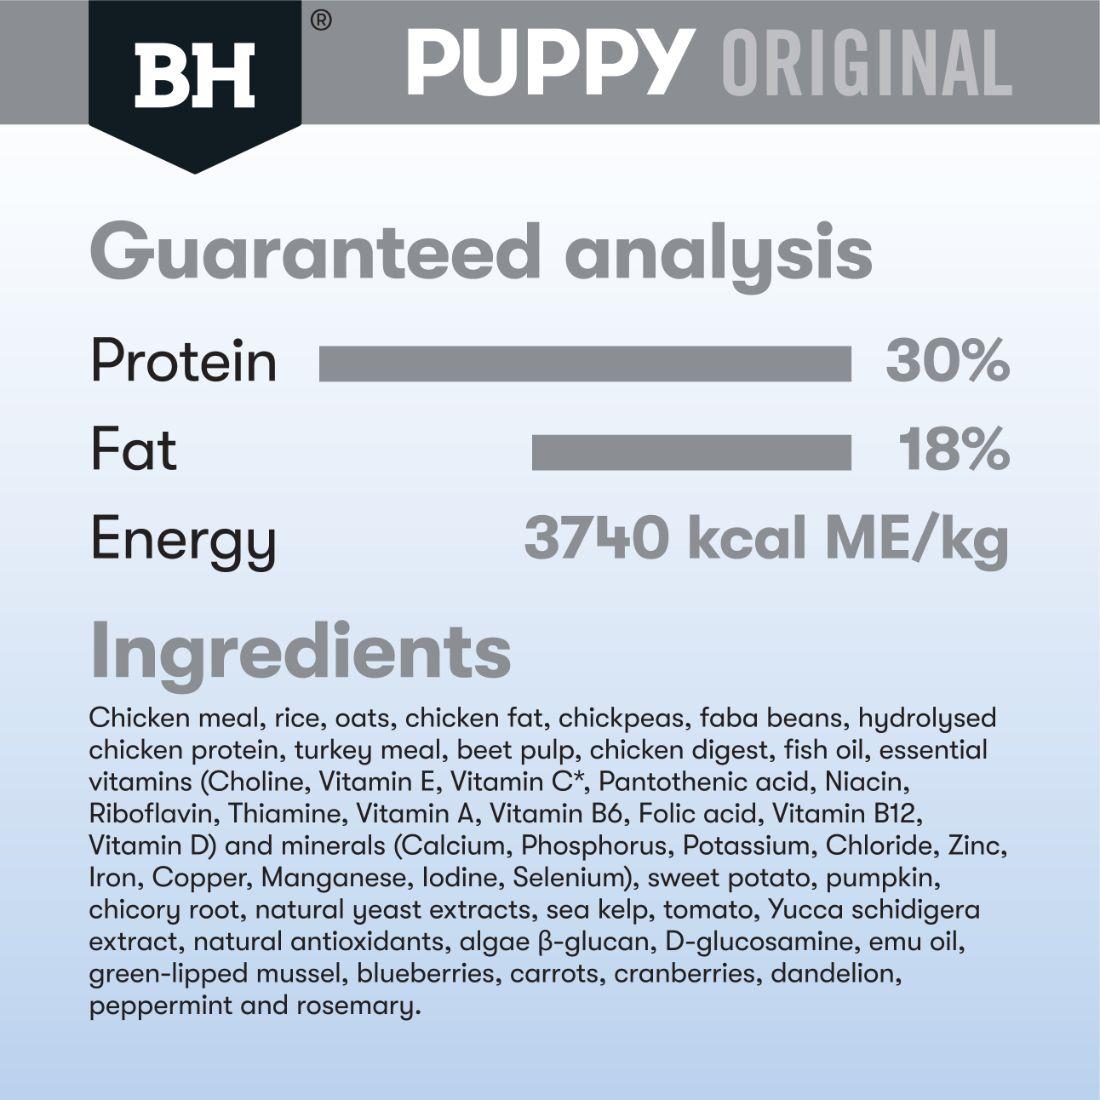 Black Hawk Puppy Medium Breed Chicken & Rice Dry Dog food